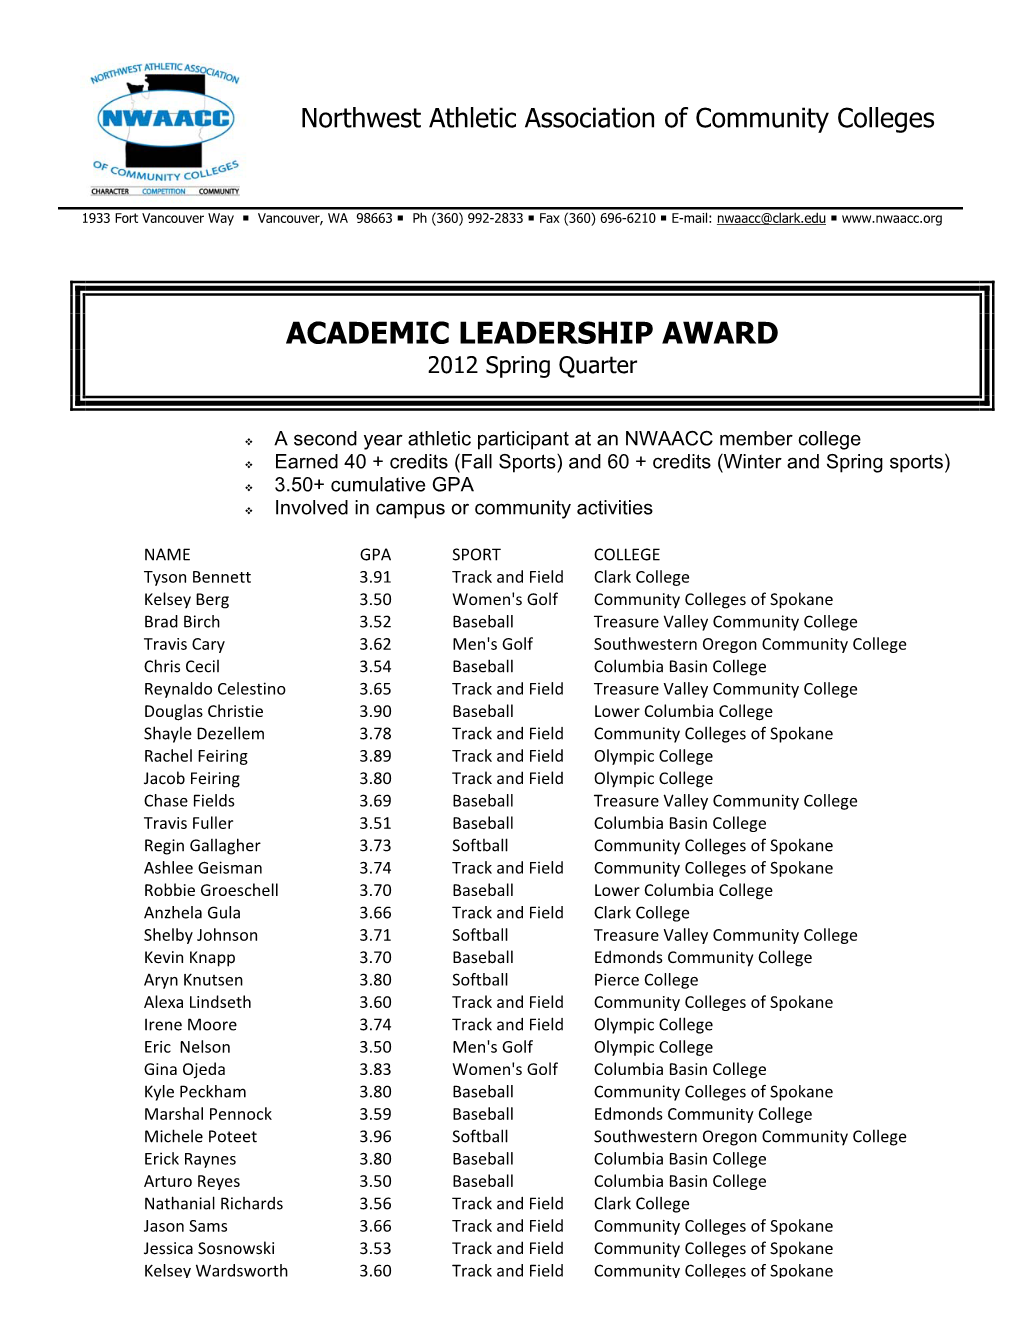 Academic Leadership Award